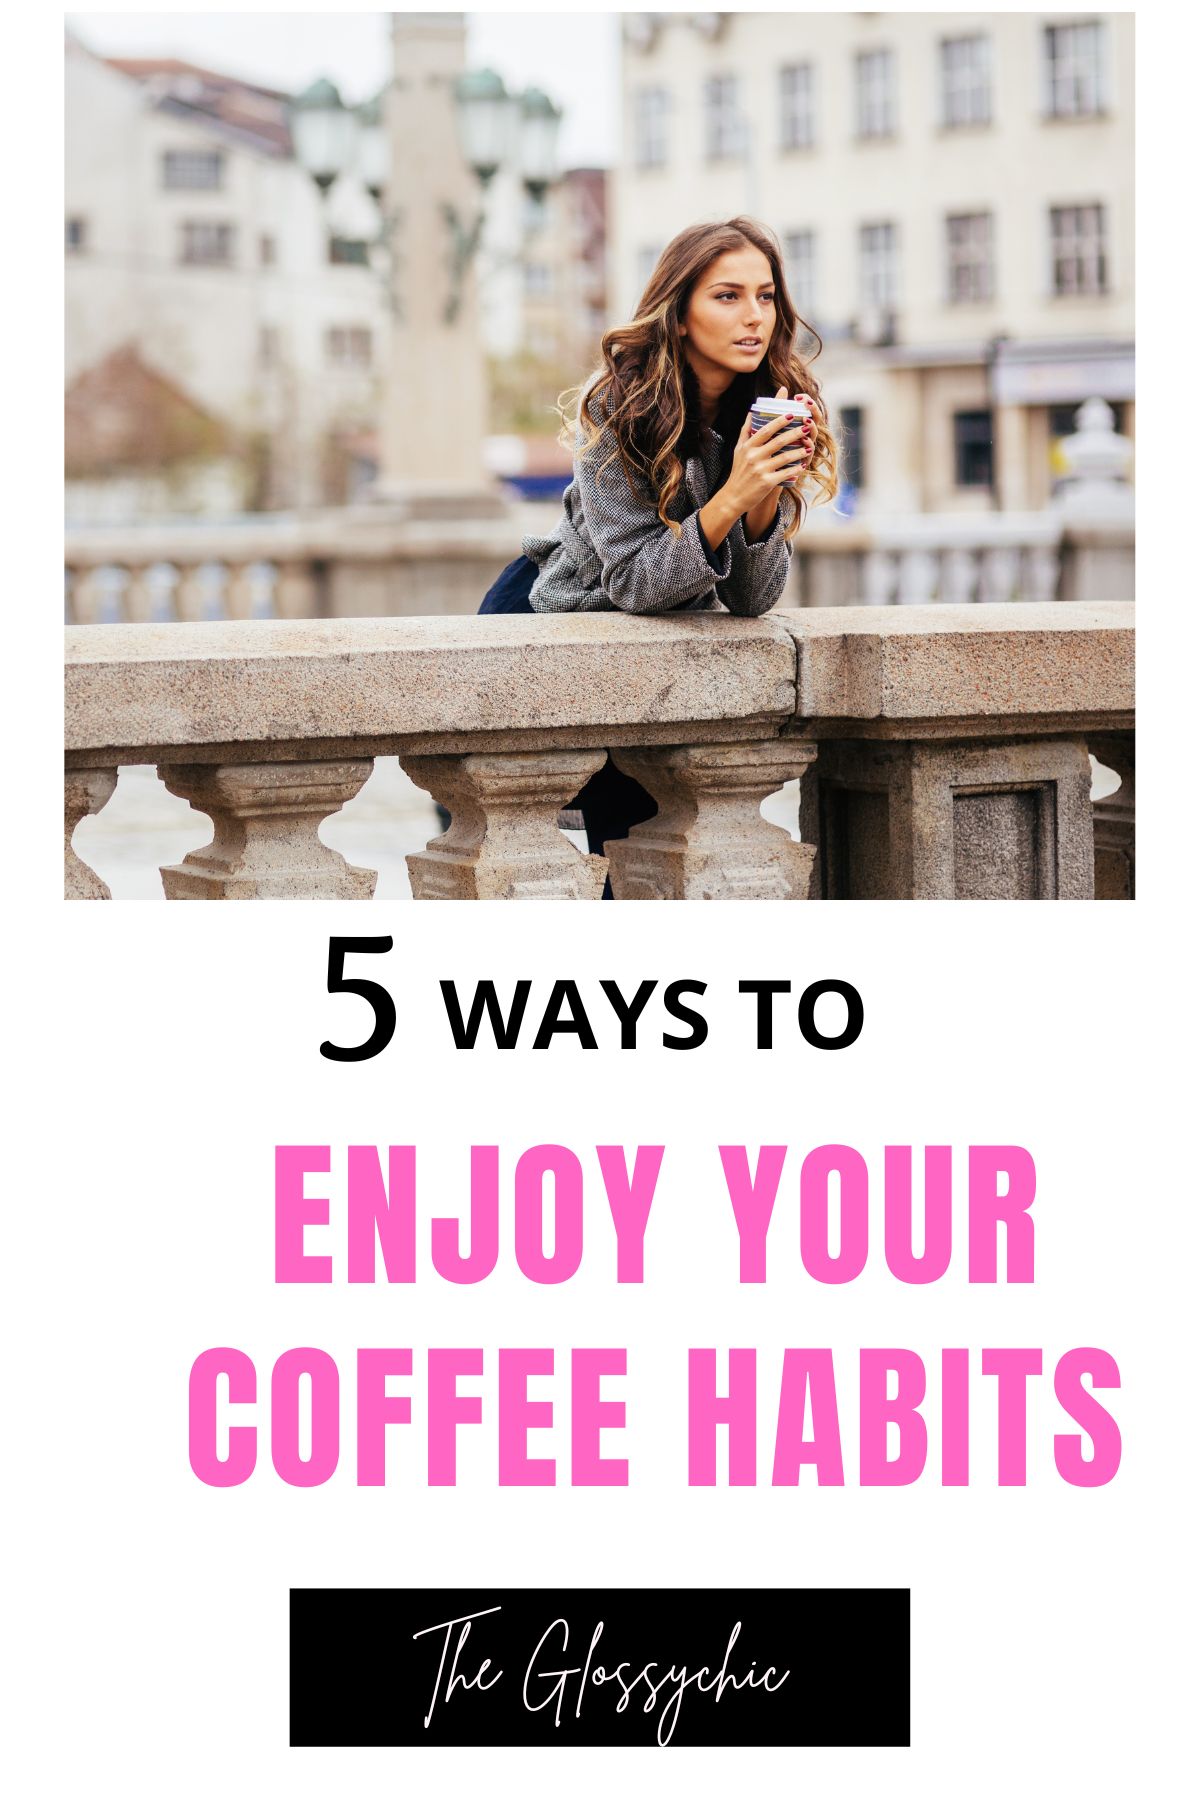 5 ways to enjoy your coffee habits